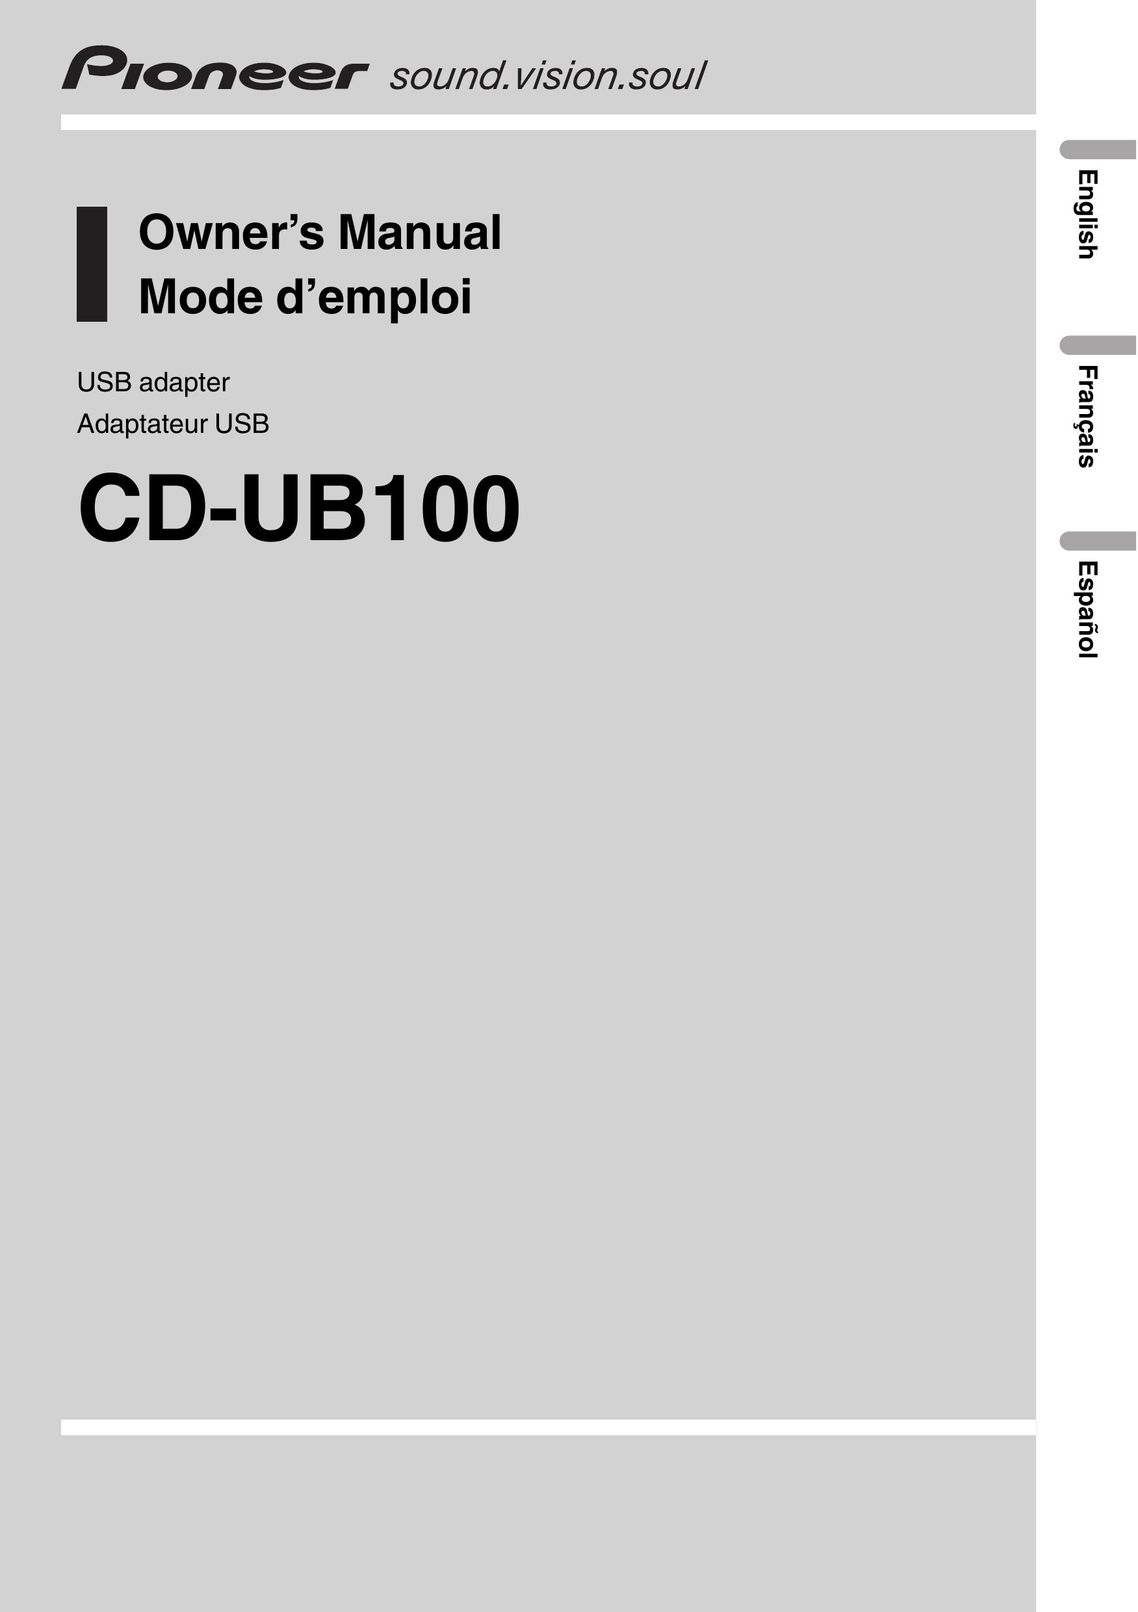 Pioneer CD-UB100 MP3 Player User Manual